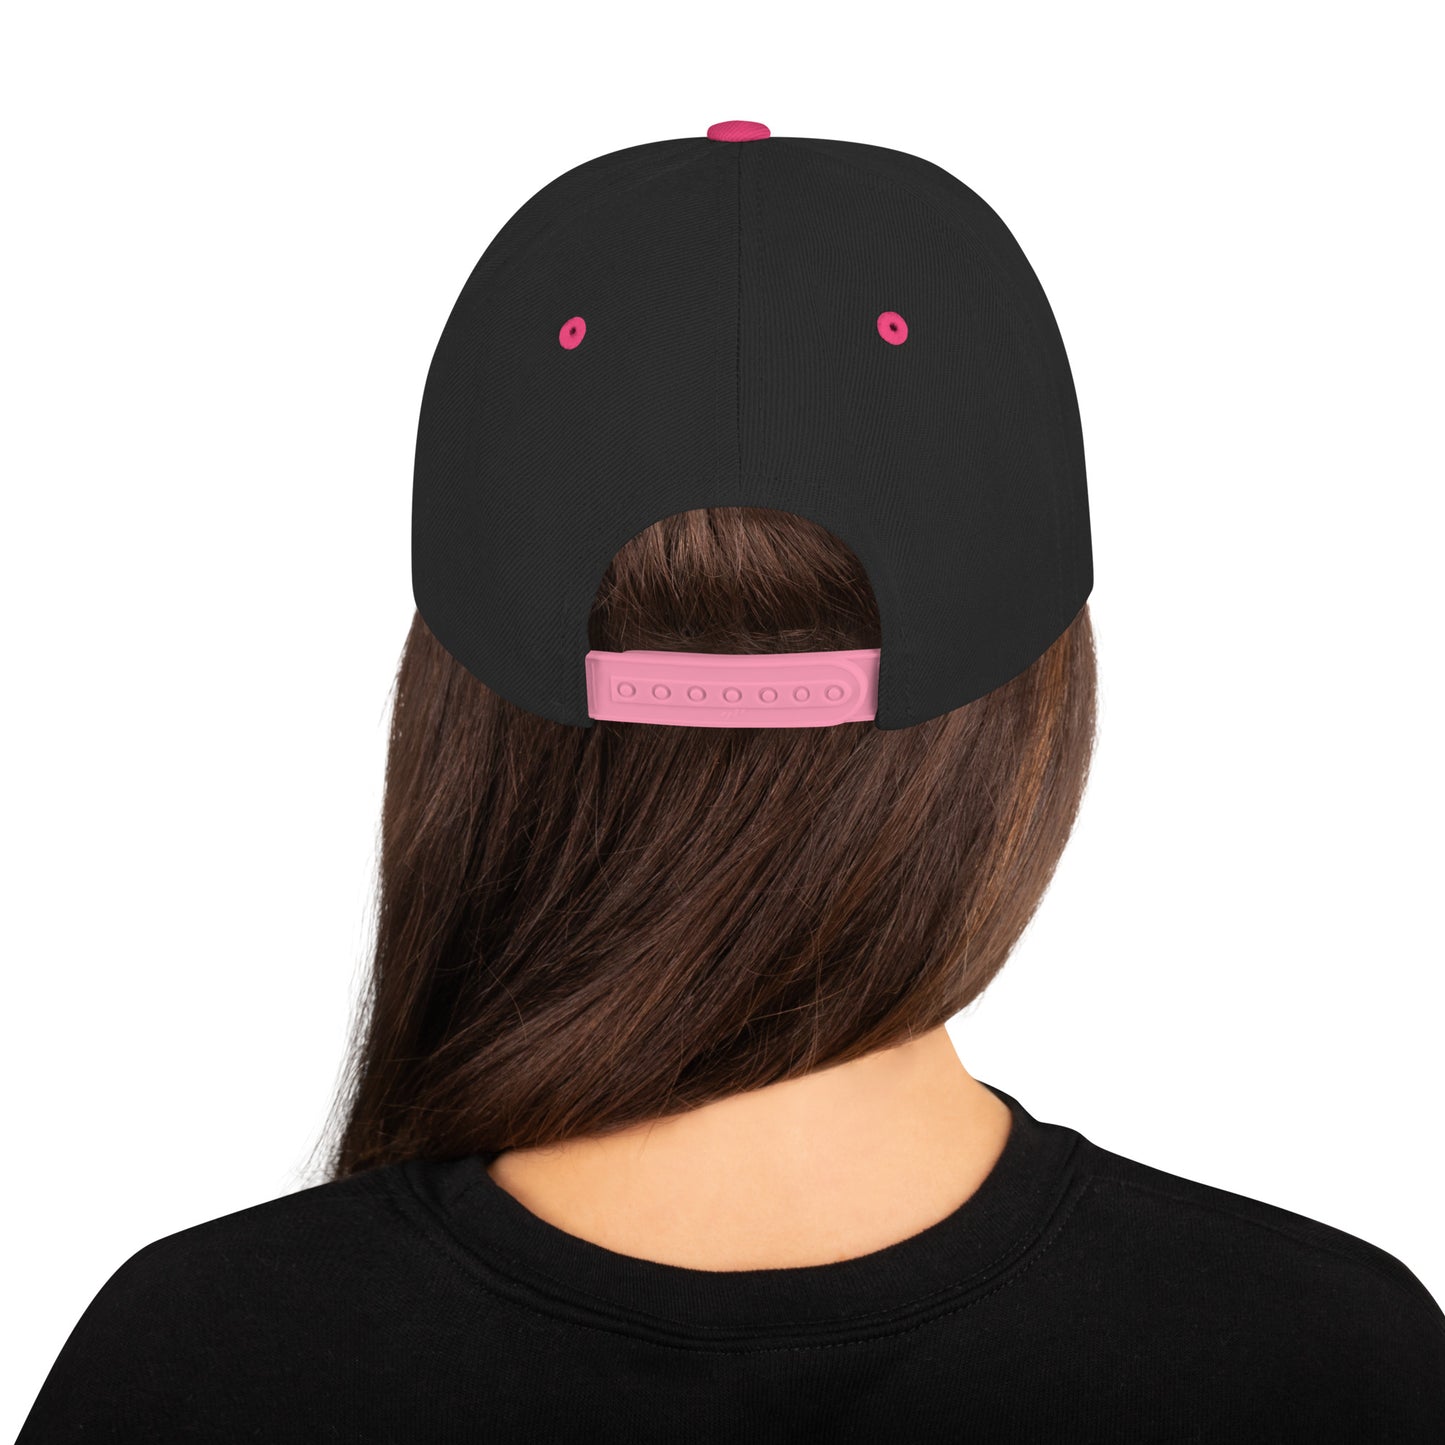 Chingona - Snapback Hat